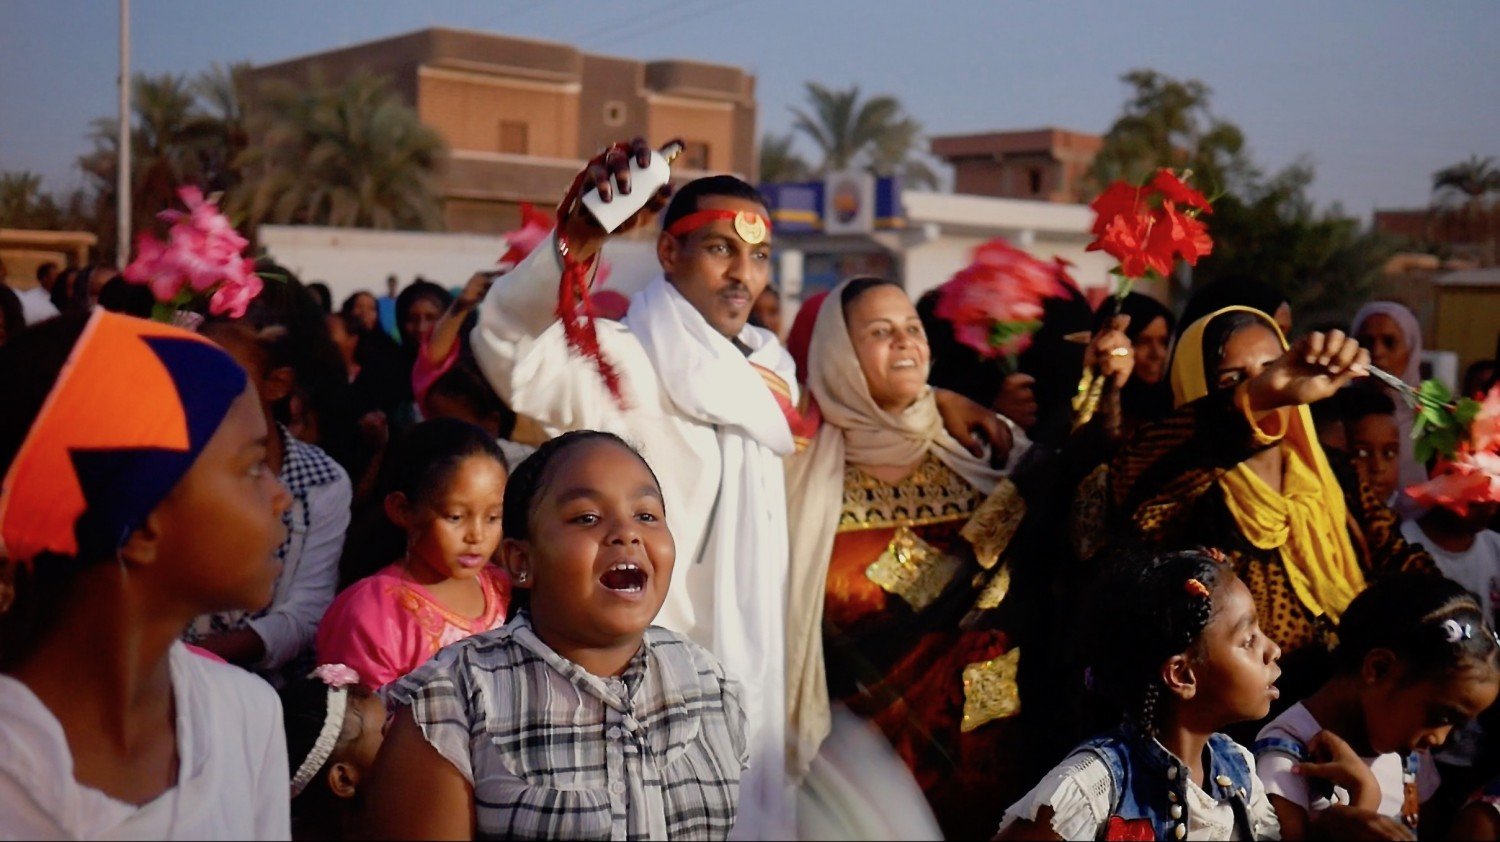 Nubijskie wesele, rejon Kom Ombo, Egipt 2018, fot. Łukasz Kumor